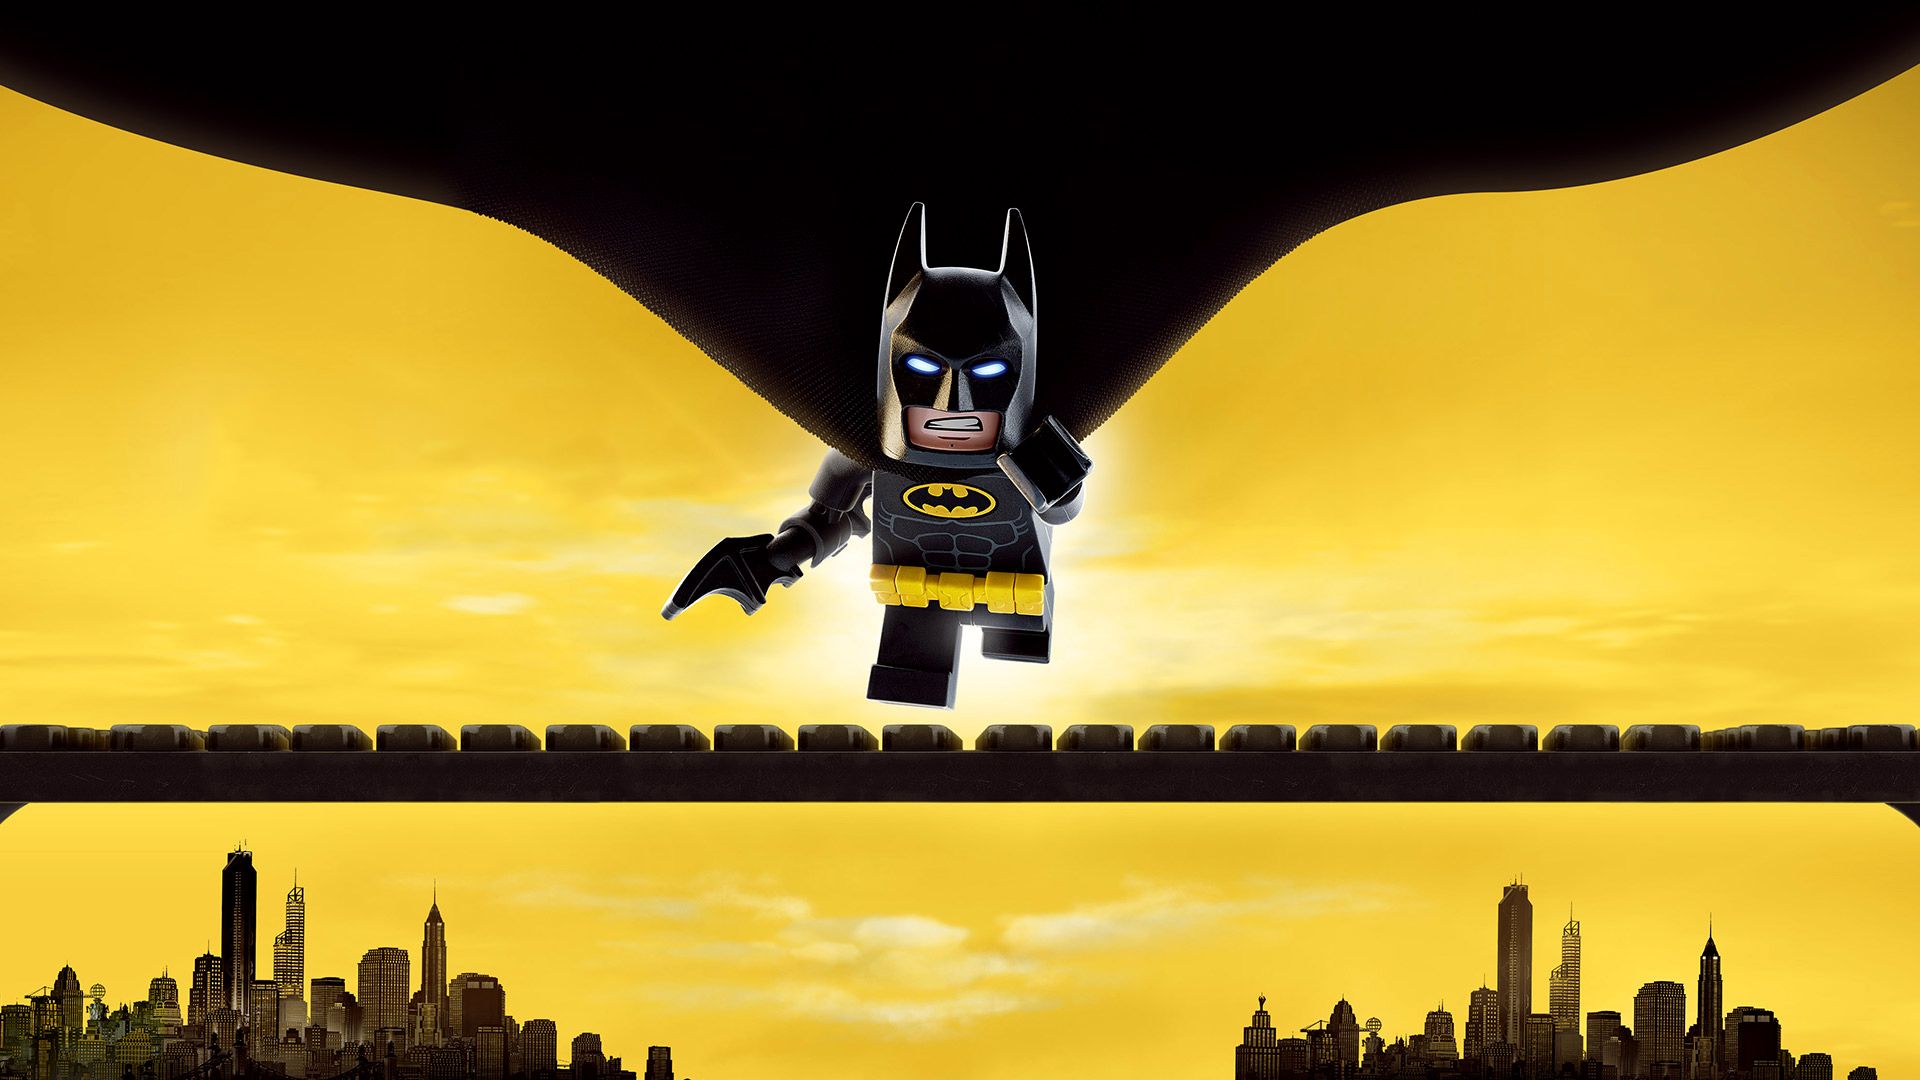 Free download The Lego Batman Movie wallpaper 16 [1920x1080] for your Desktop, Mobile & Tablet. Explore The LEGO Batman Movie Wallpaper. The LEGO Batman Movie Wallpaper, Lego Batman Movie